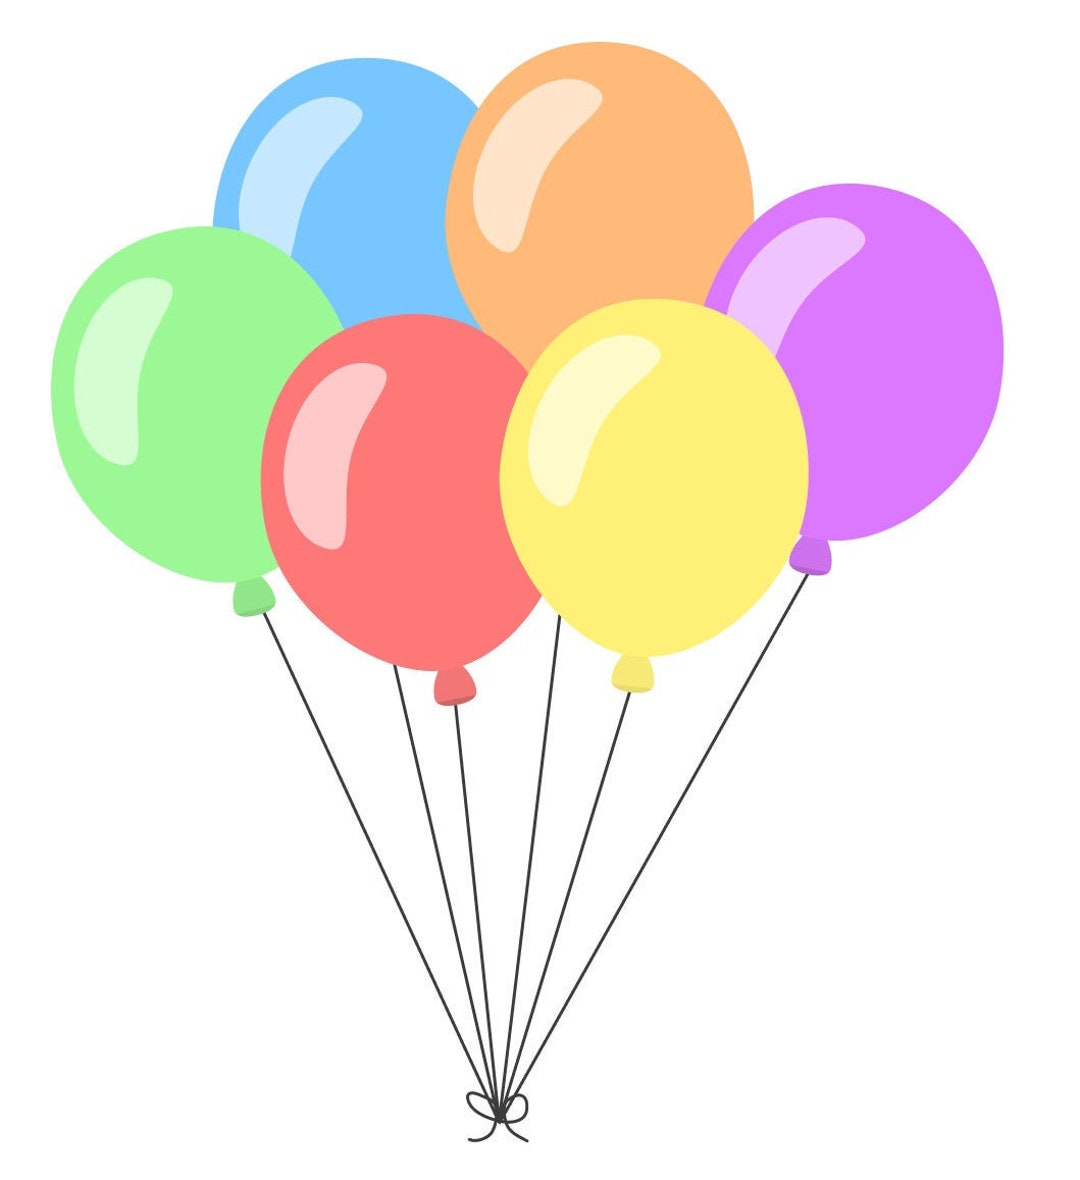 balloons vector image